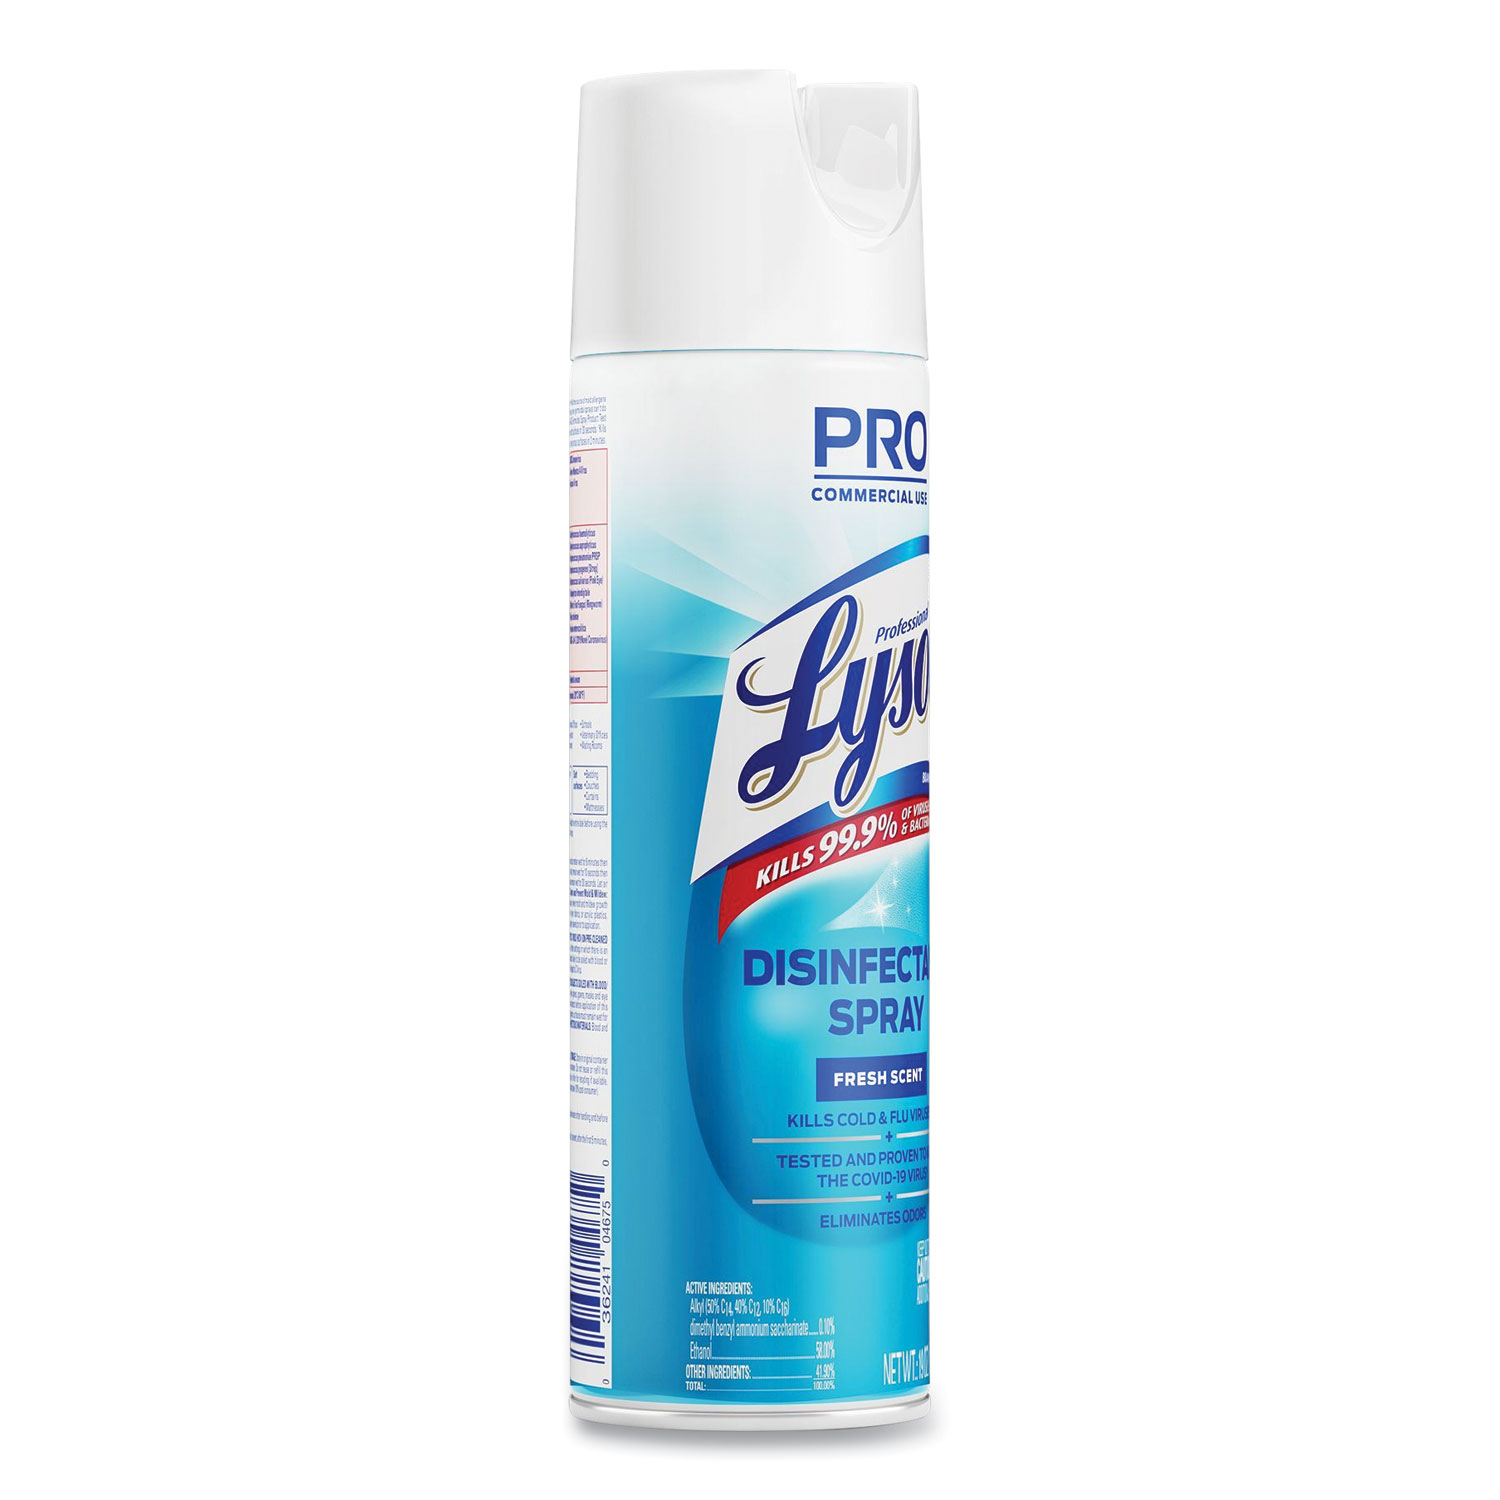 Disinfectant Foam Cleaner, 24 oz Aerosol Spray